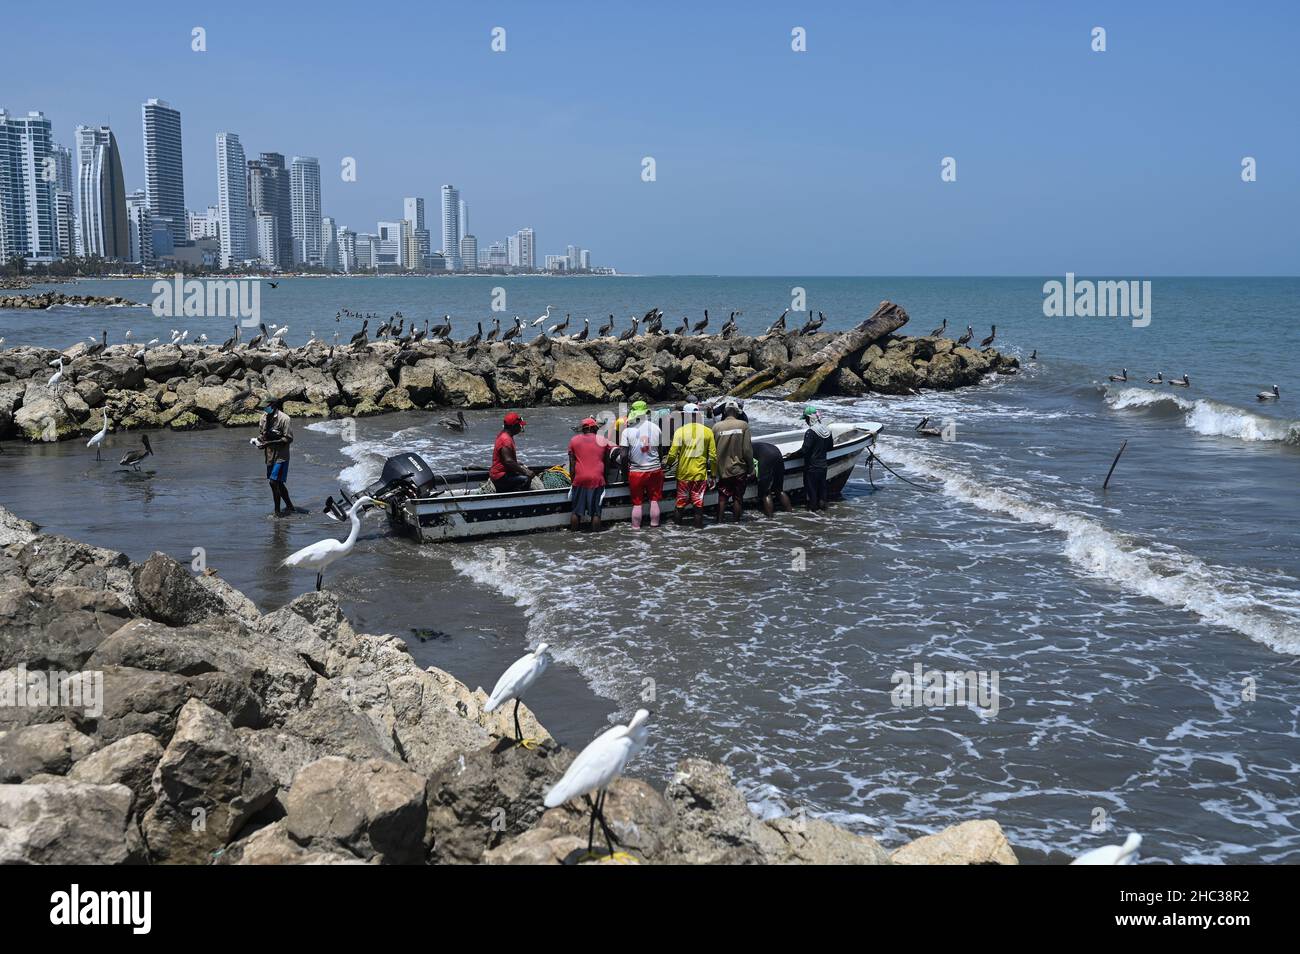 Fishermen working on Bocagrande beach in Cartagena de Indias, Colombia Stock Photo